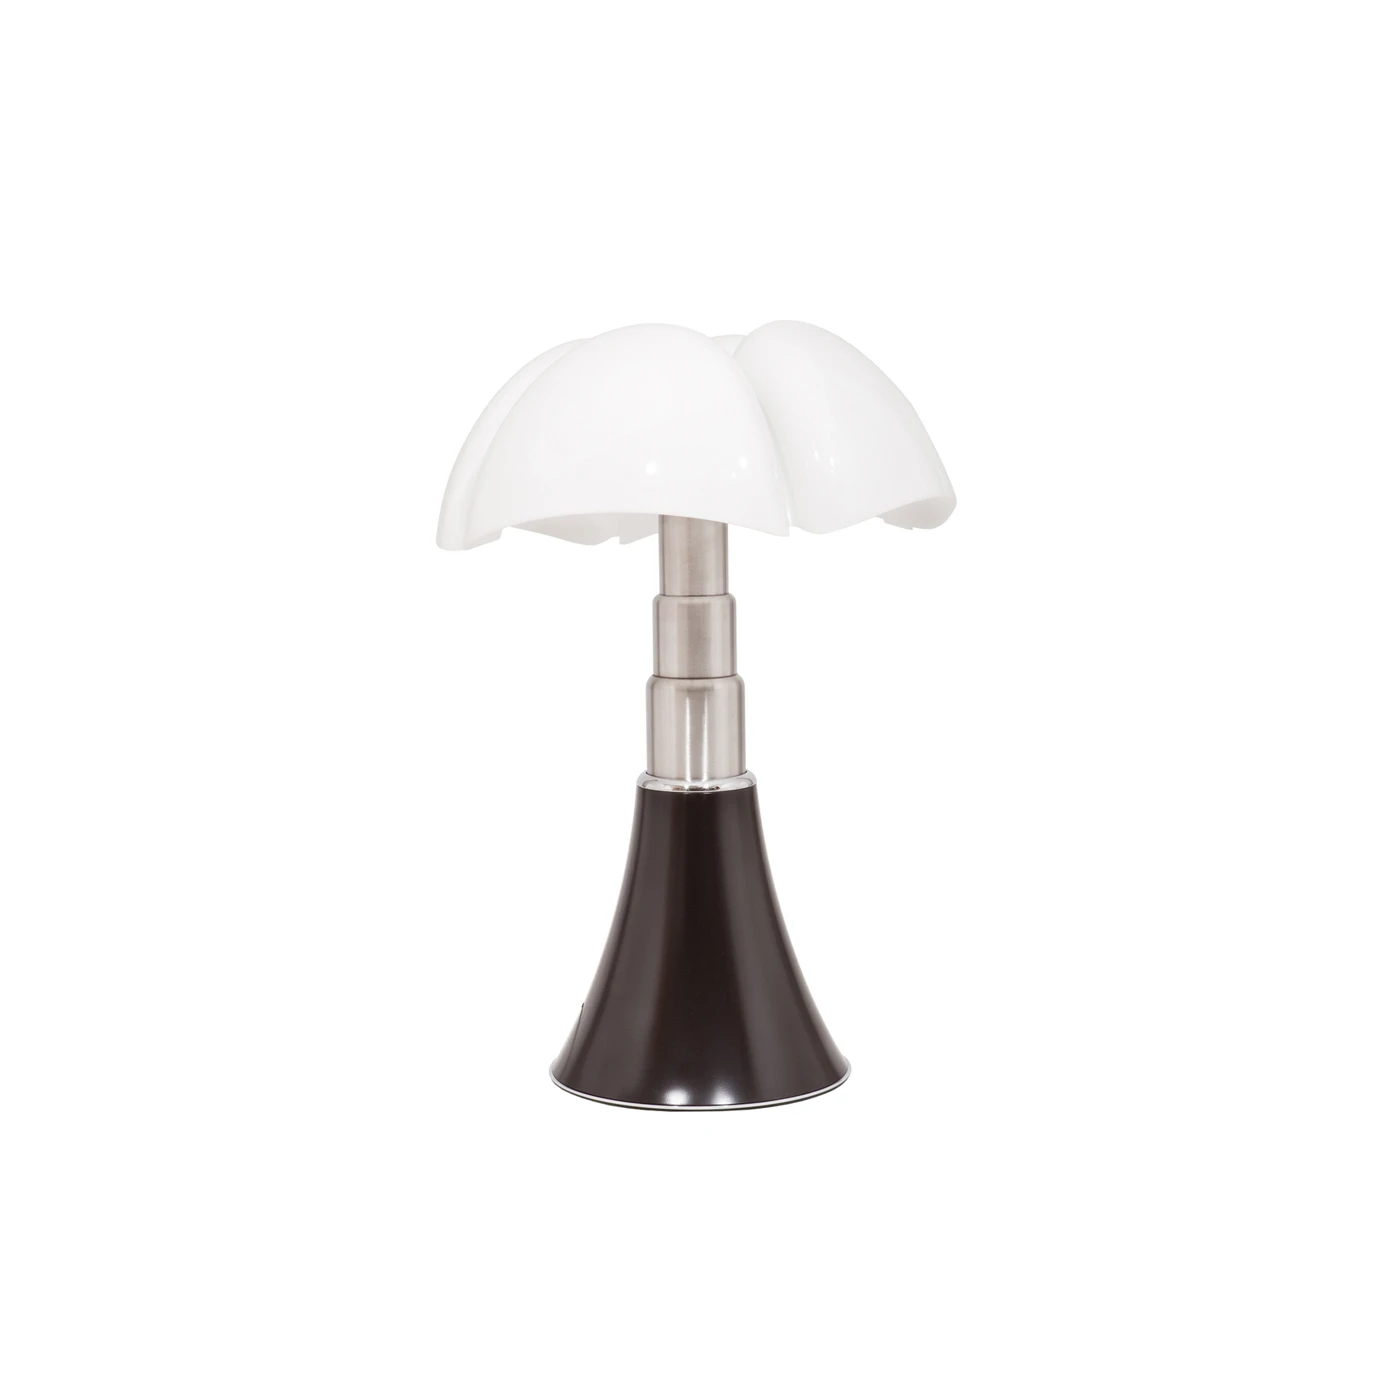 Pipistrello Medium Lampe de Table Martinelli Luce – Homier Luminaire